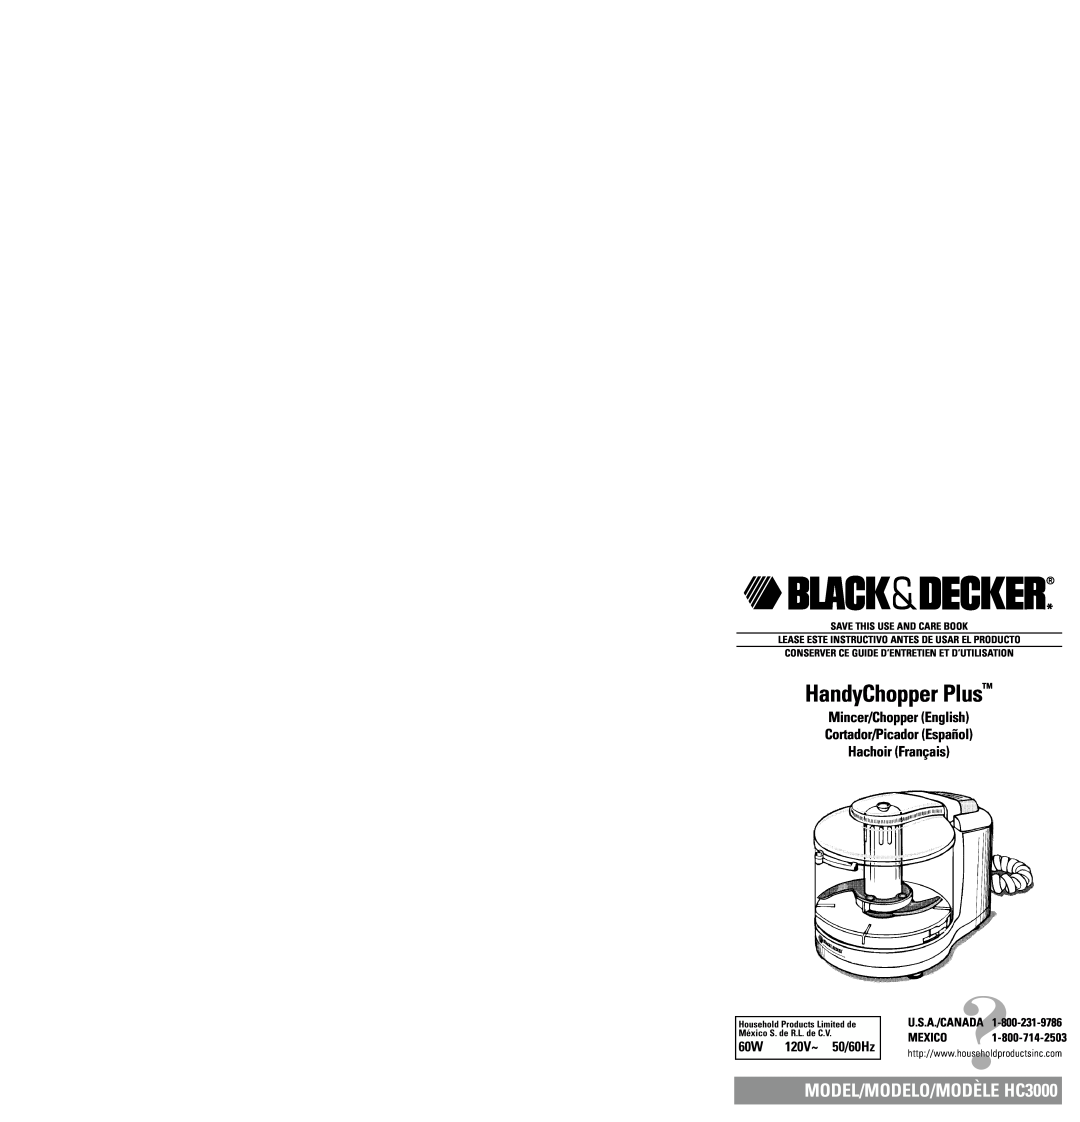 Black & Decker warranty HandyChopper PlusTM, MODEL/MODELO/MODÈLE HC3000, 60W 120V~ 50/60Hz, Save This Use And Care Book 